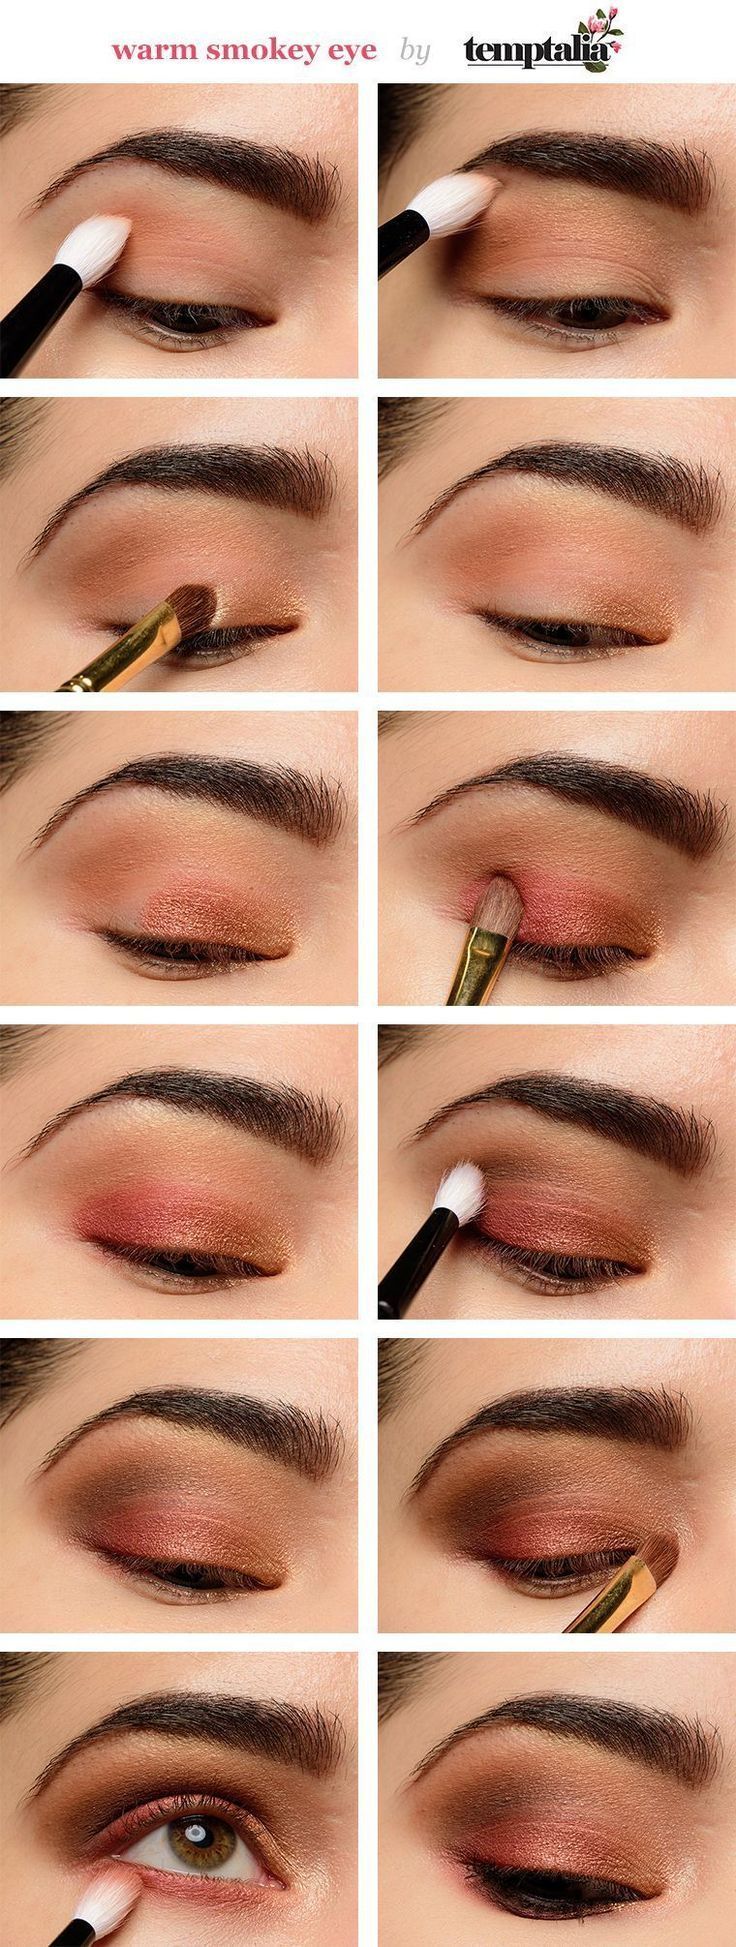 How to Apply Eyeshadow: Smokey Eye Makeup Tutorial for Beginners (Temptalia) -   10 makeup Glitter how to apply ideas